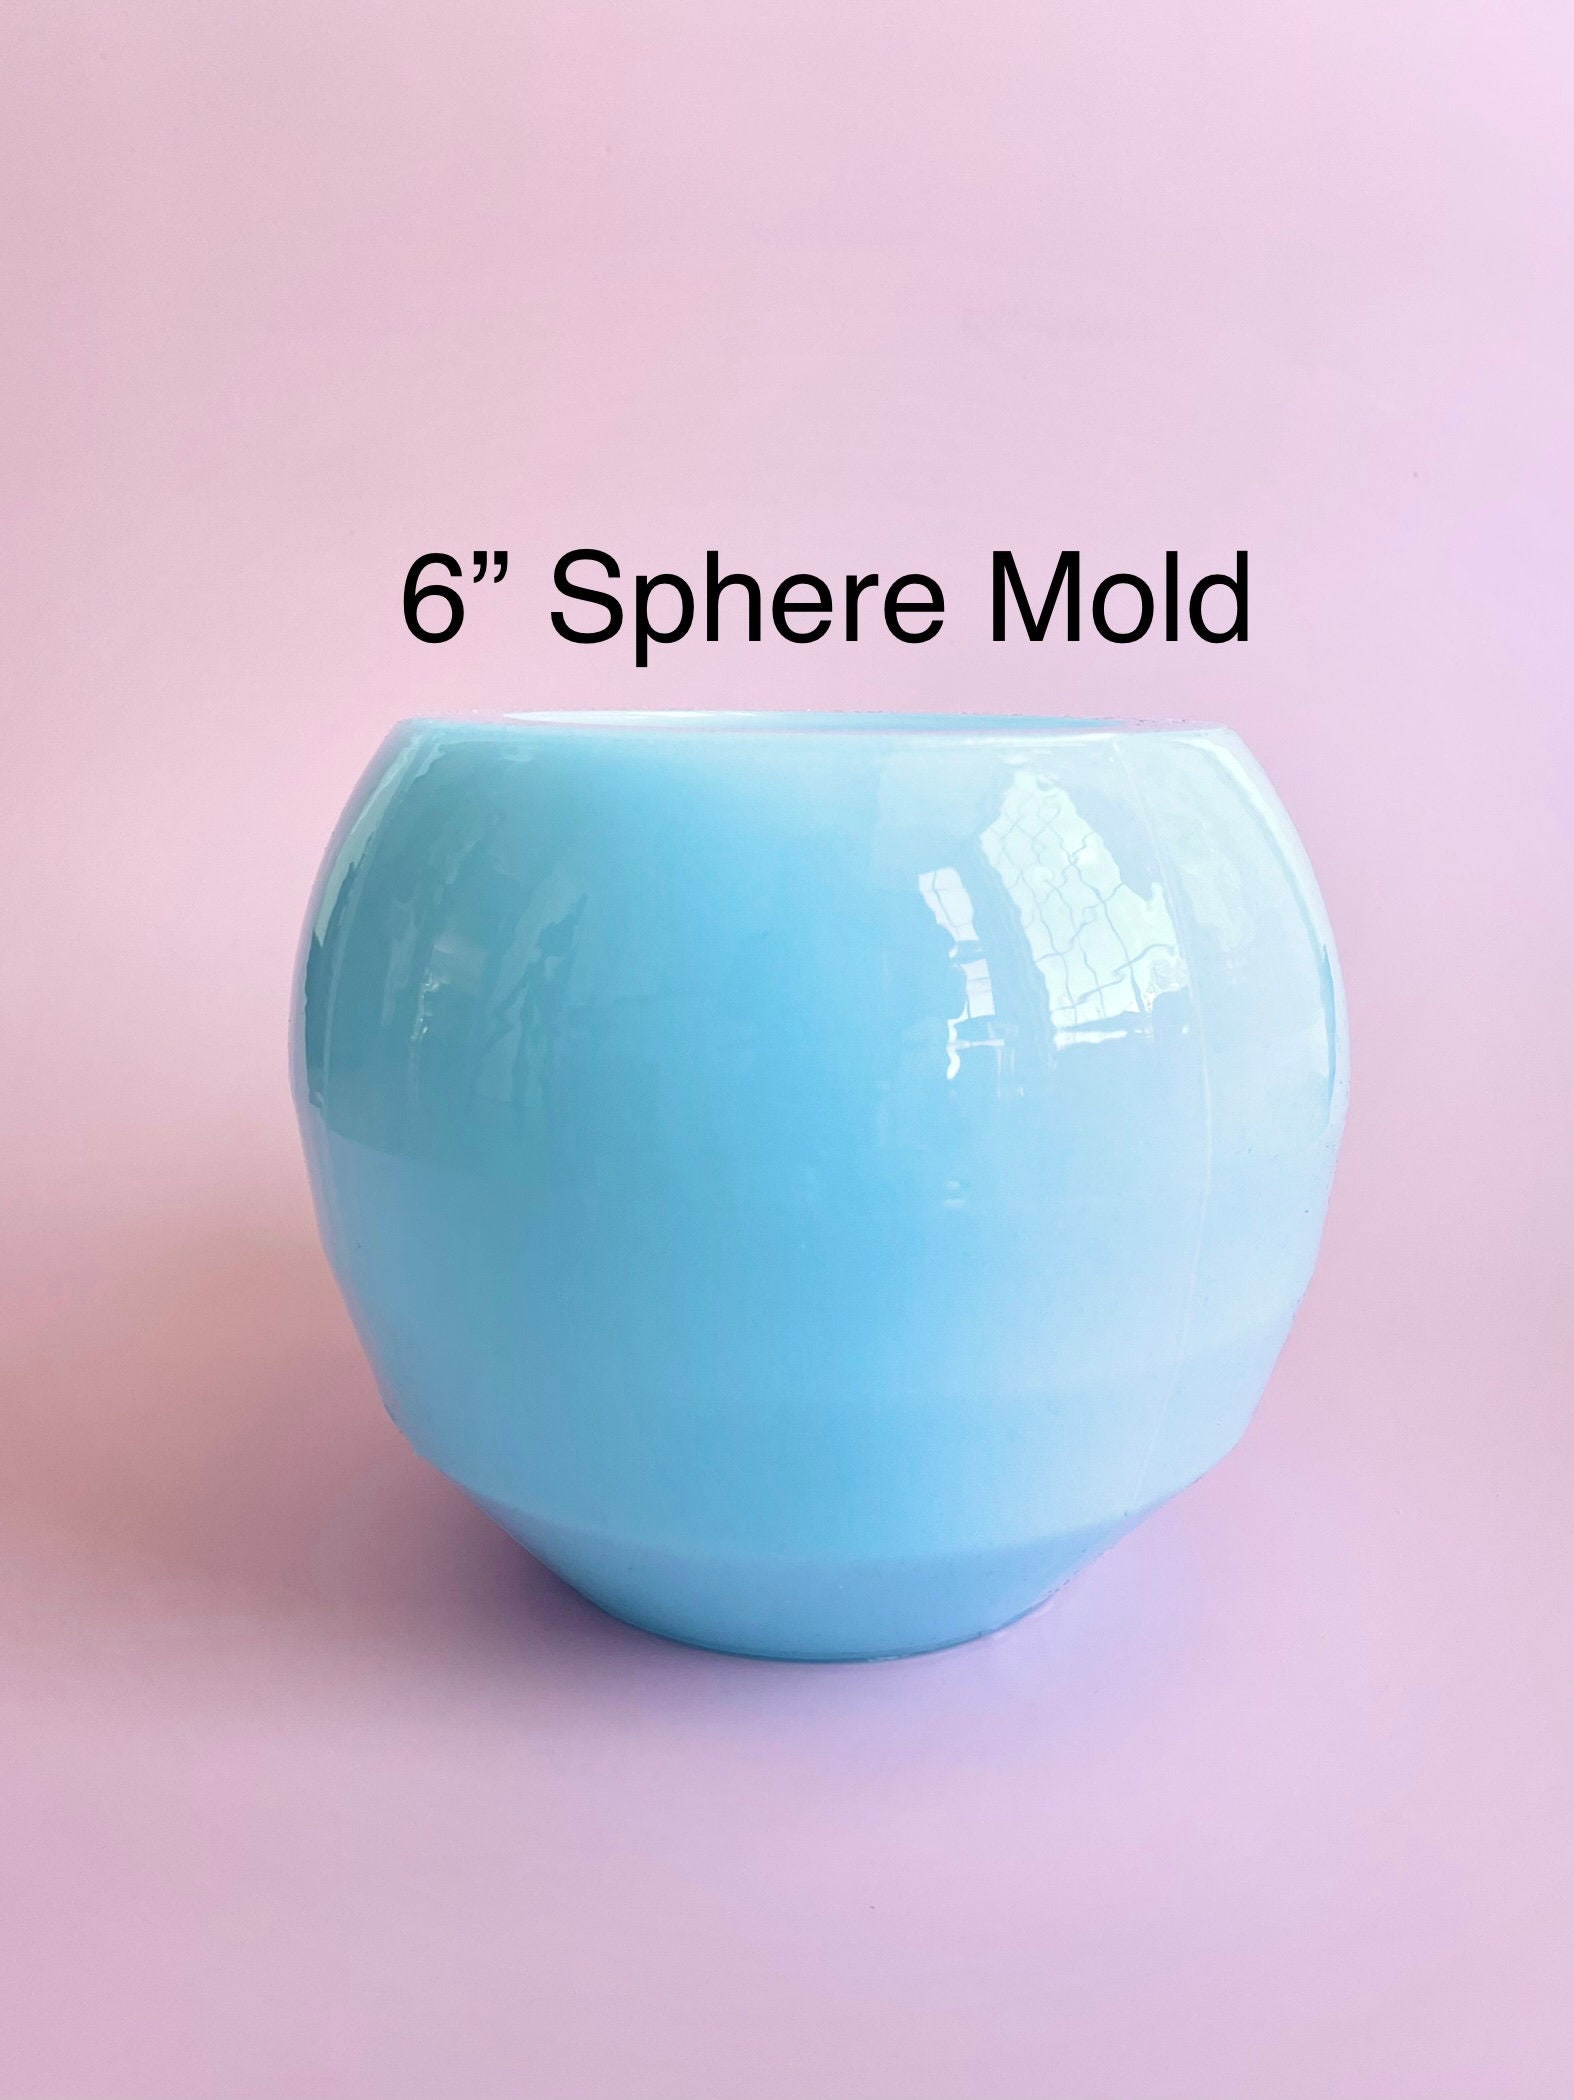 6” Sphere Mold